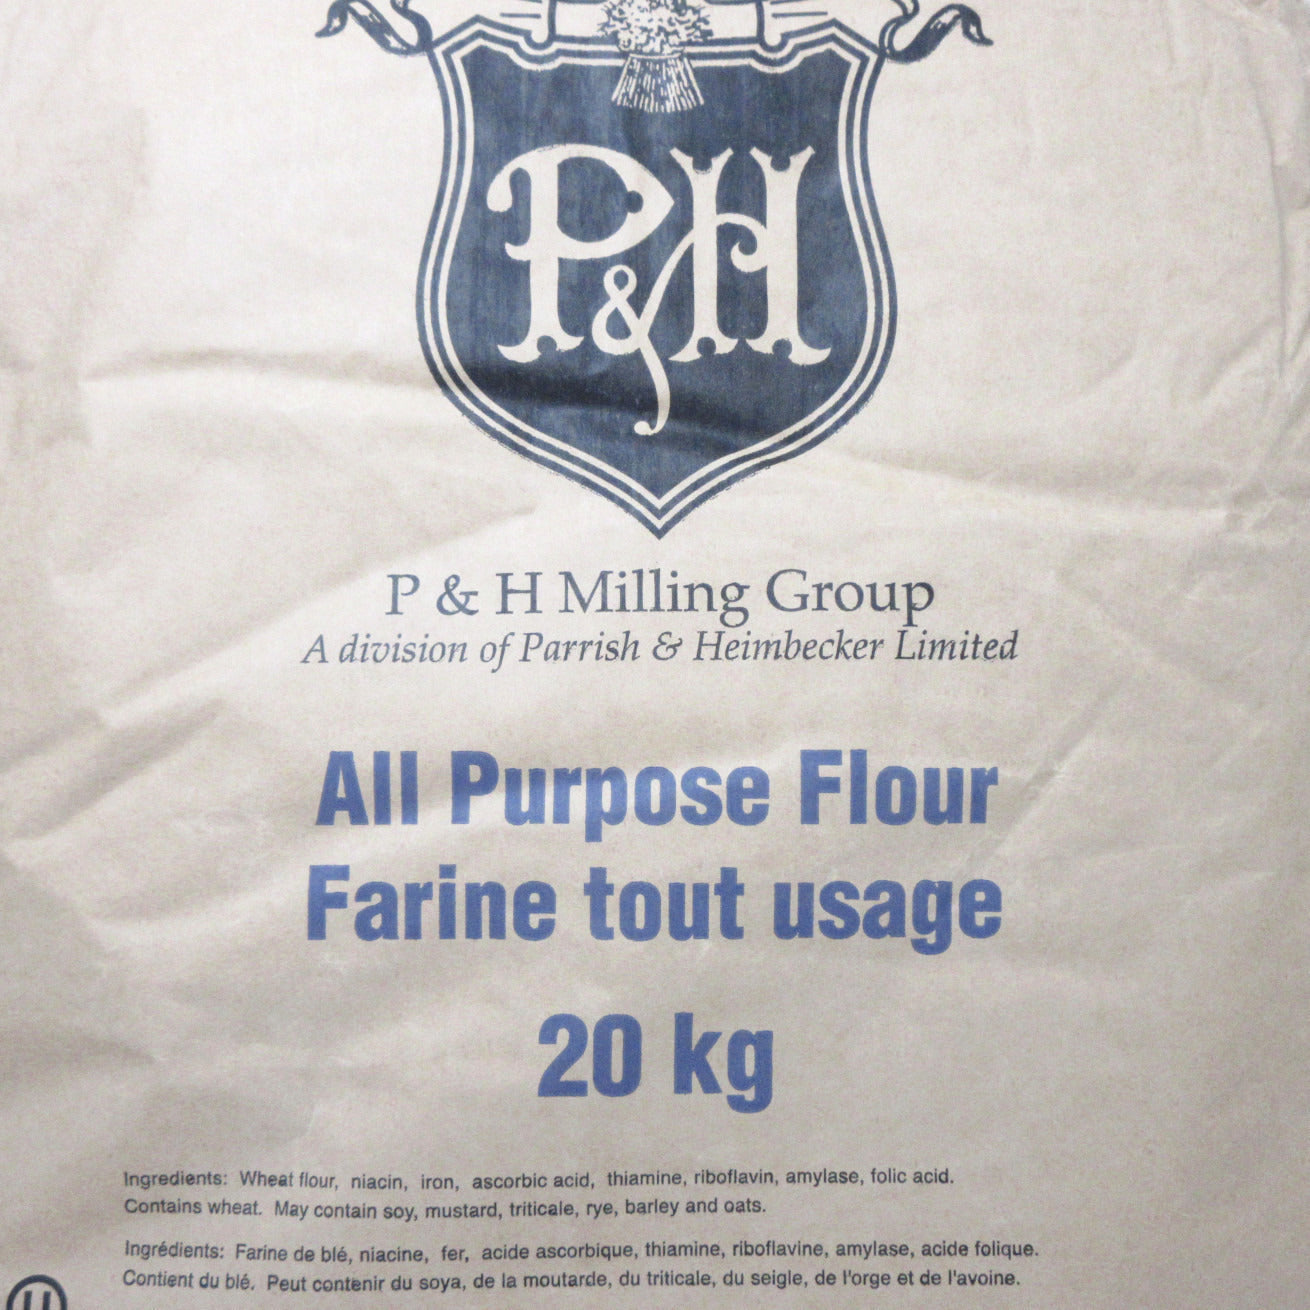 Flour Barrel product image - All Purpose Flour